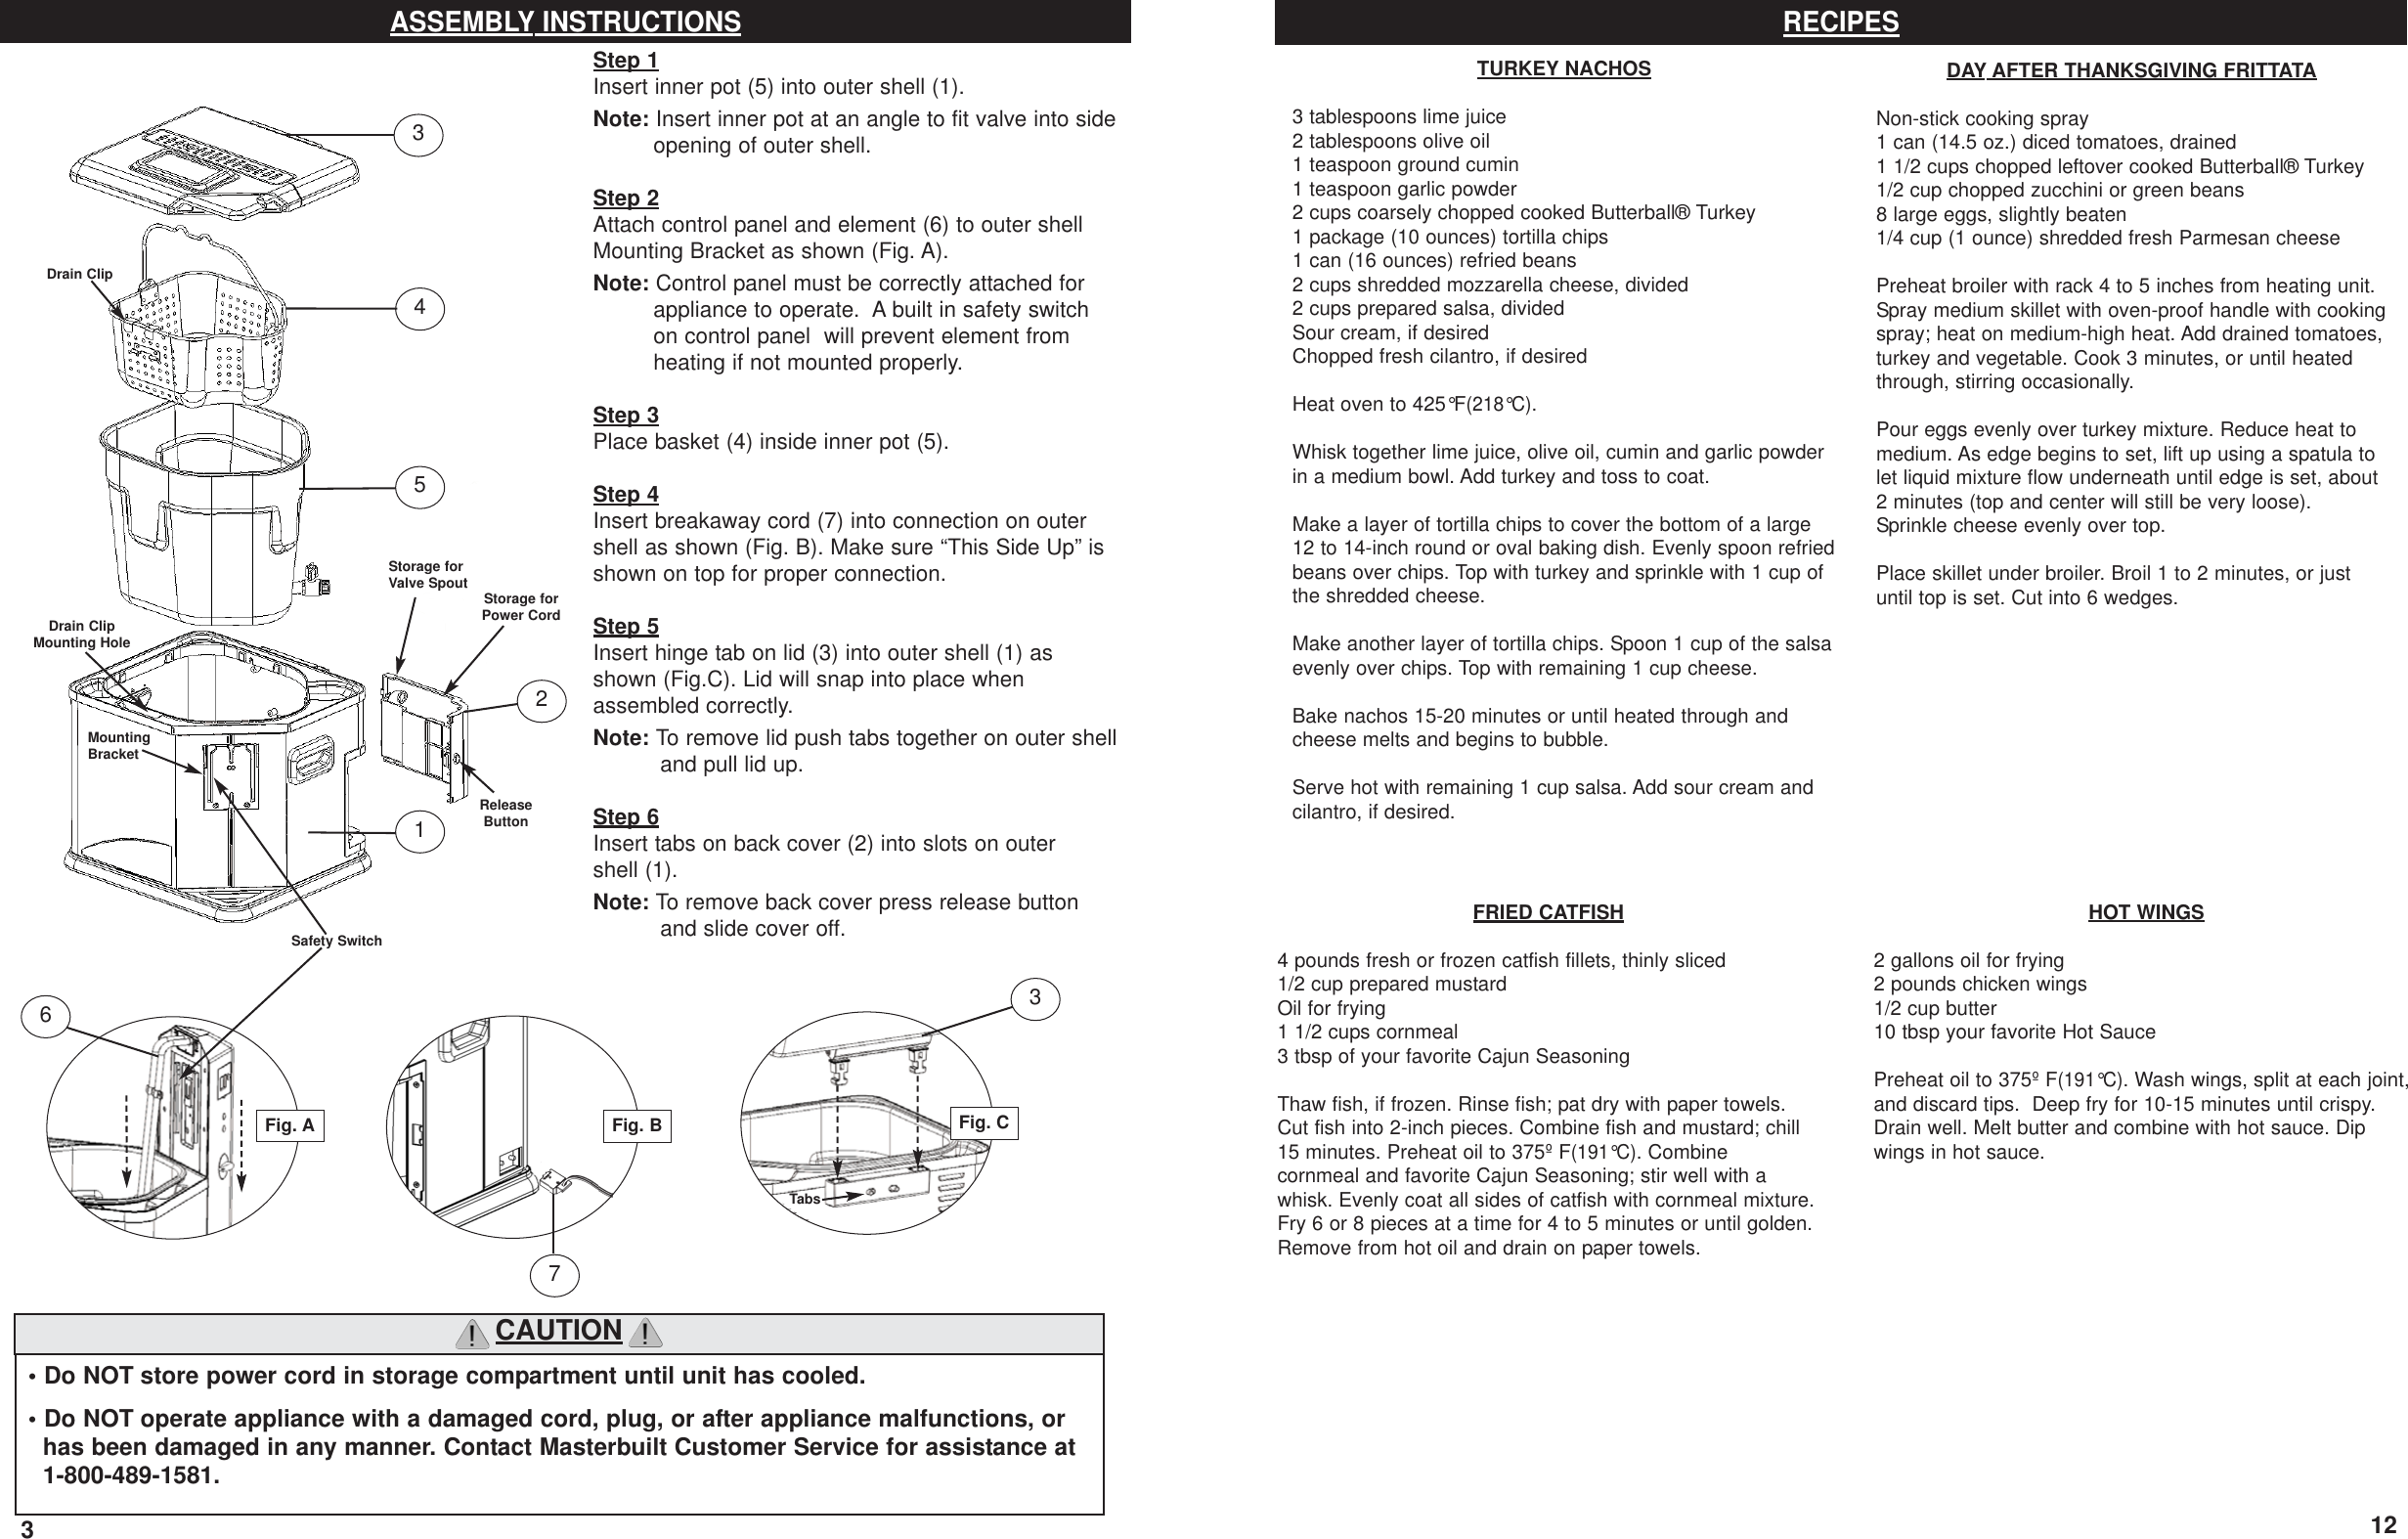 Page 4 of 8 - Masterbuilt Masterbuilt-Electric-Turkey-Fryer-20010109-Users-Manual- 090623 20010109 Manual  Masterbuilt-electric-turkey-fryer-20010109-users-manual